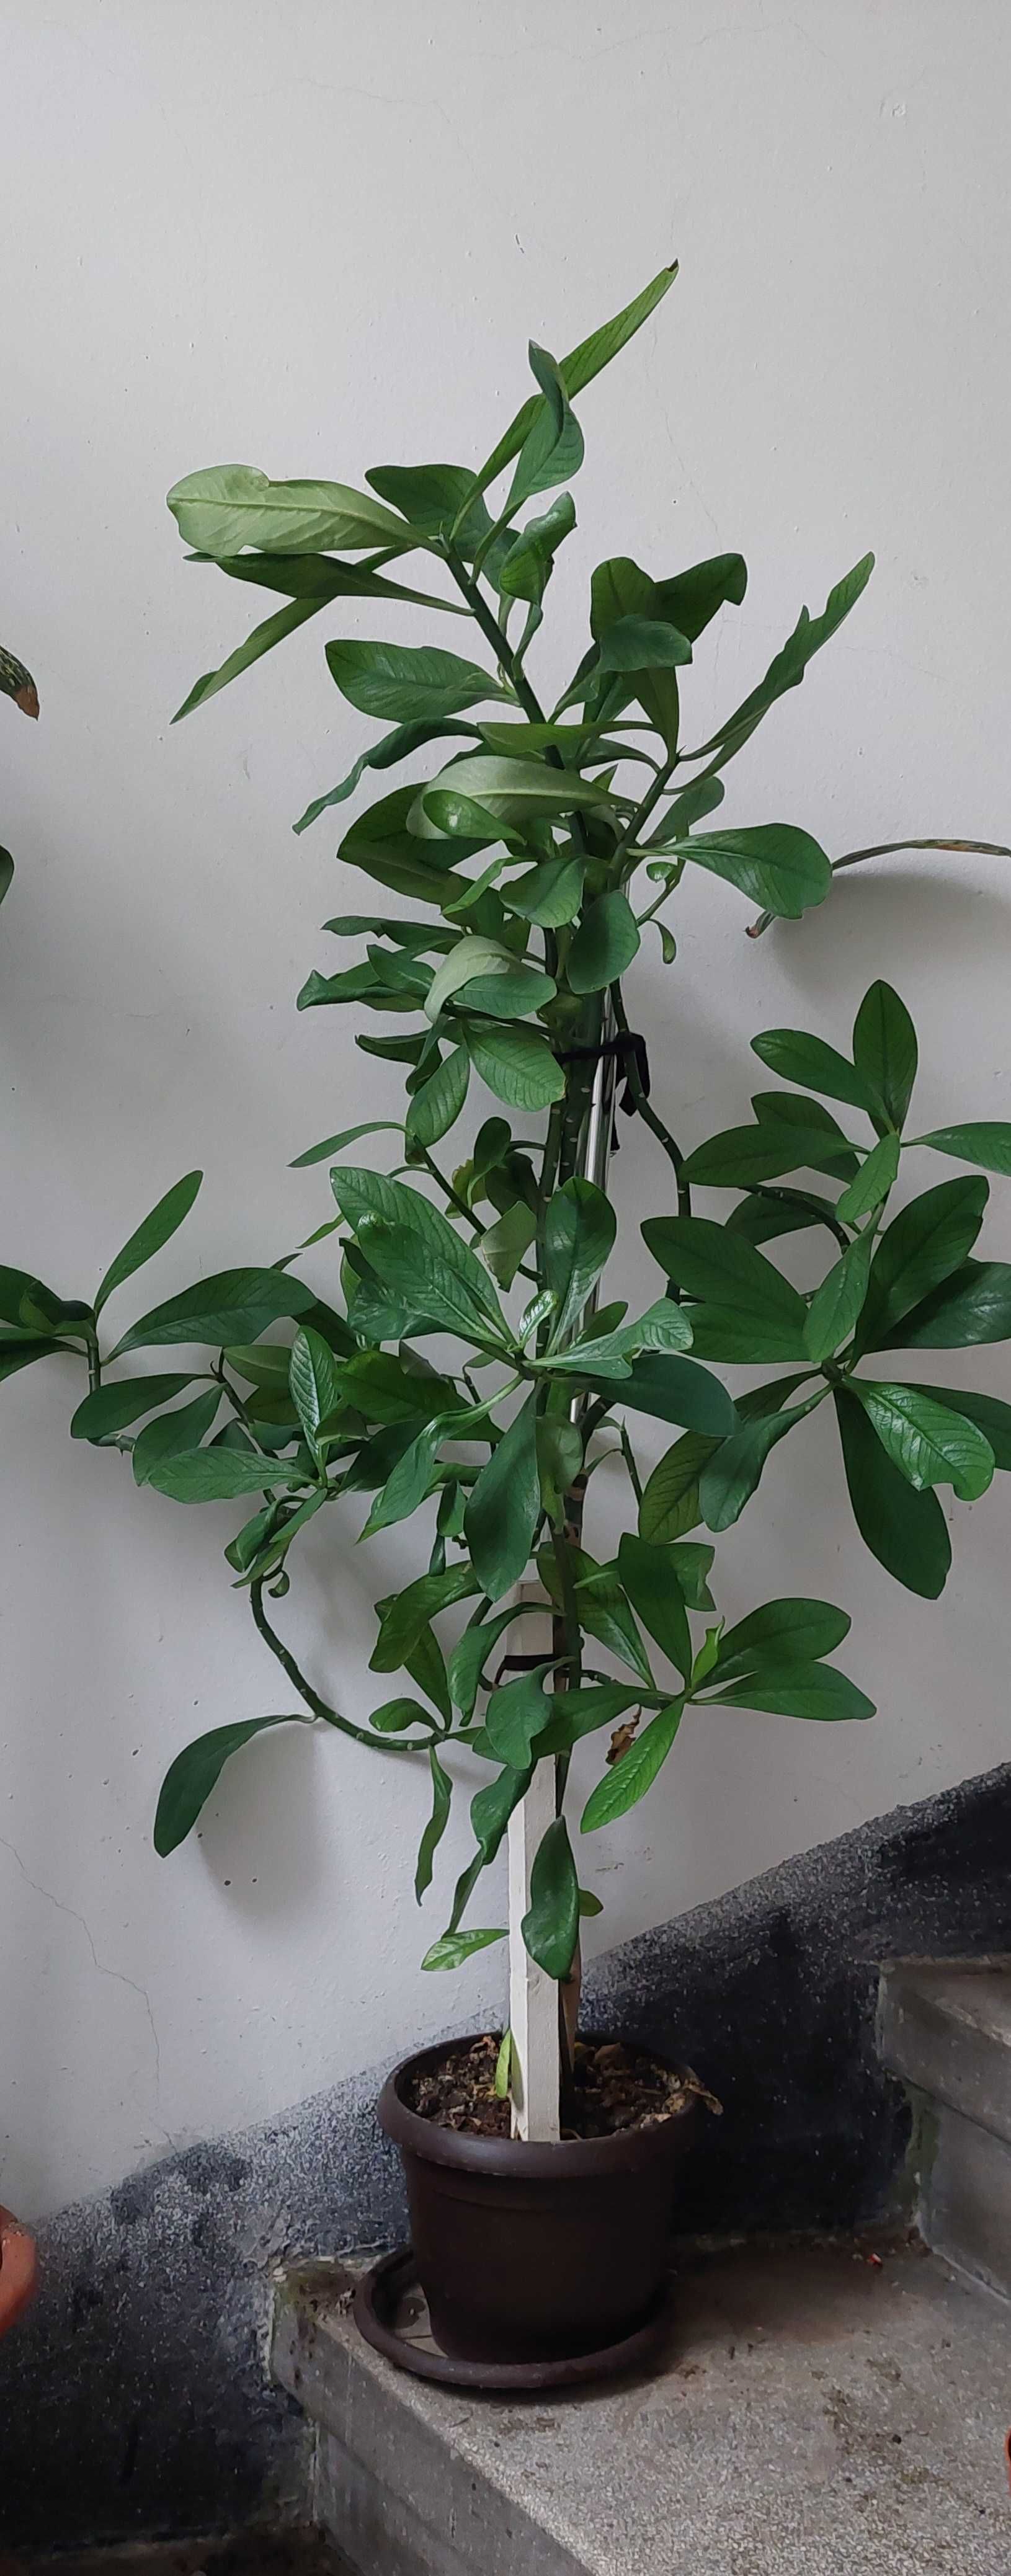 Arbore de Cauciuc planta tanara ornamentala Viguroasa